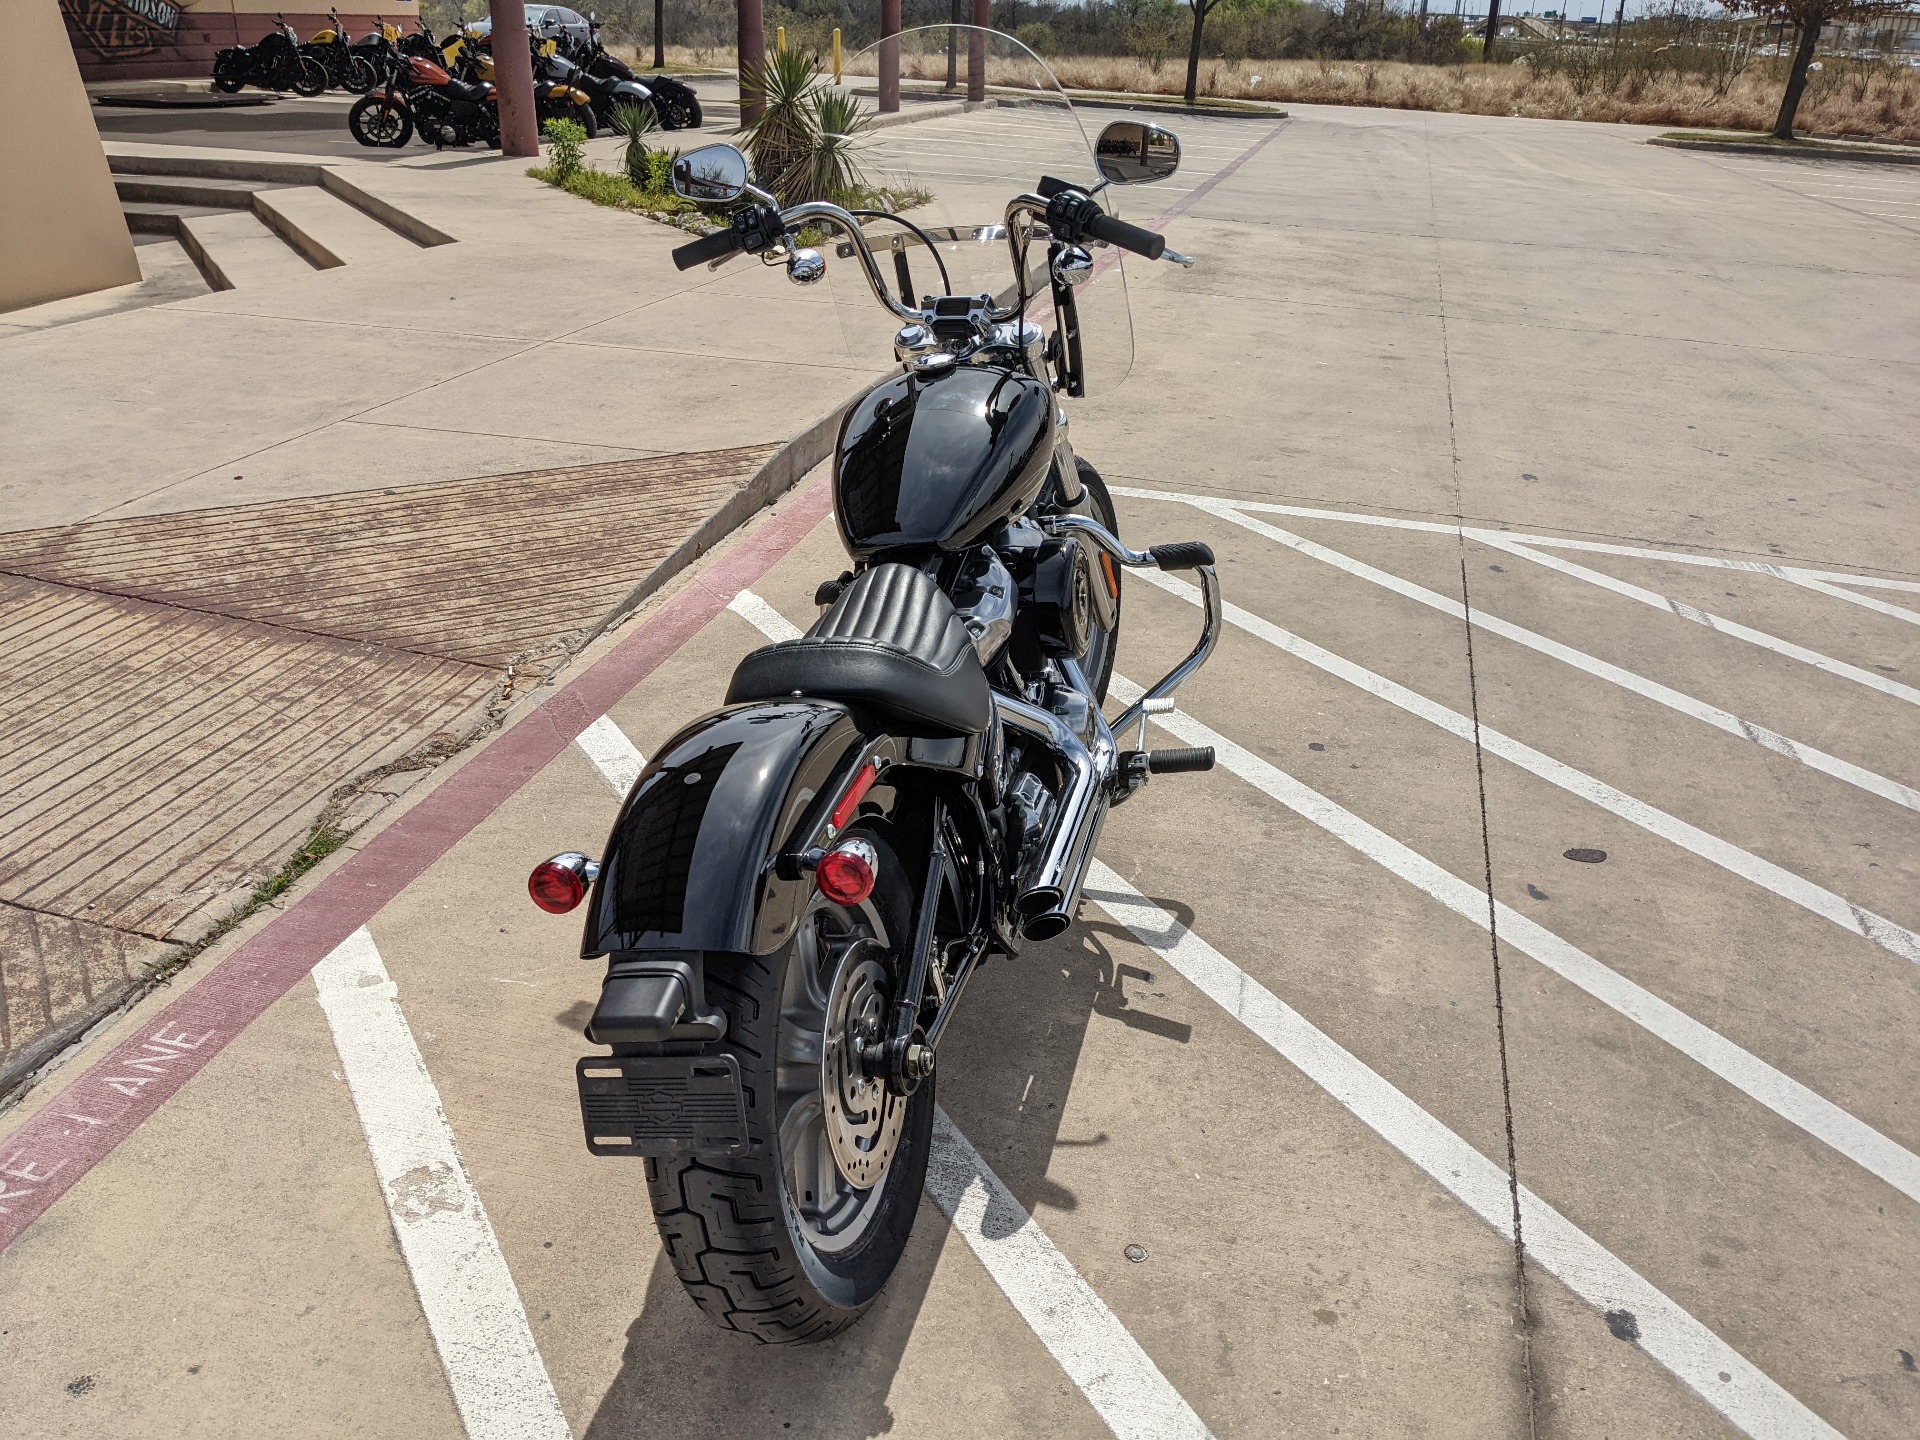 2021 Harley-Davidson Softail® Standard in San Antonio, Texas - Photo 8